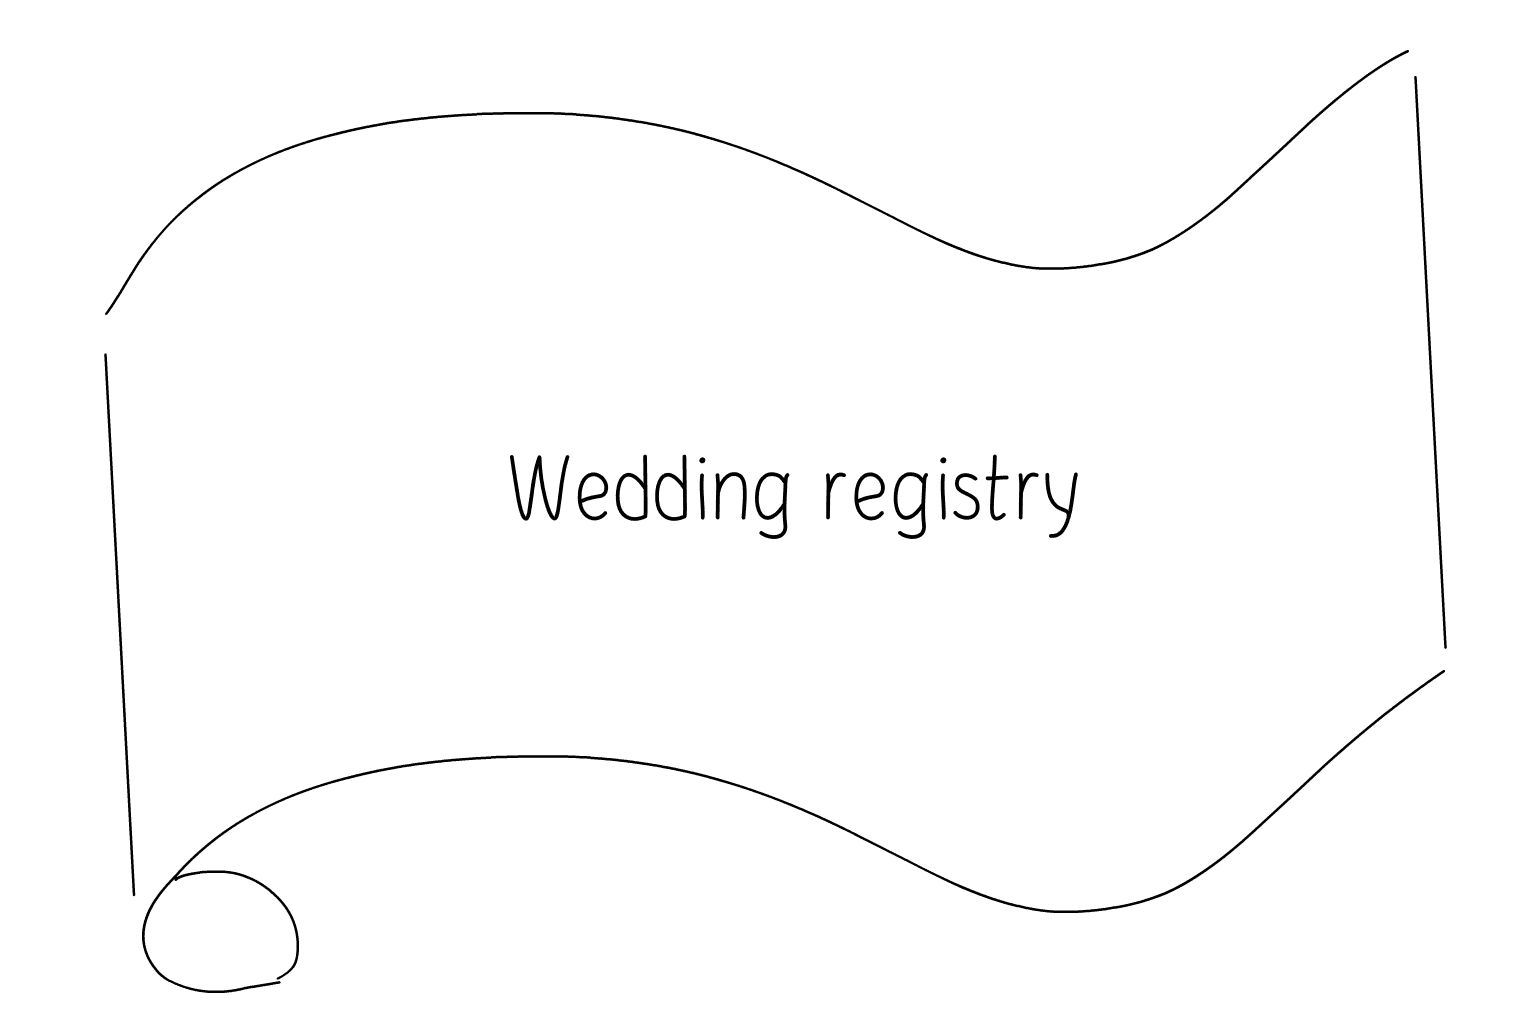 Illustration of Wedding Registry Services